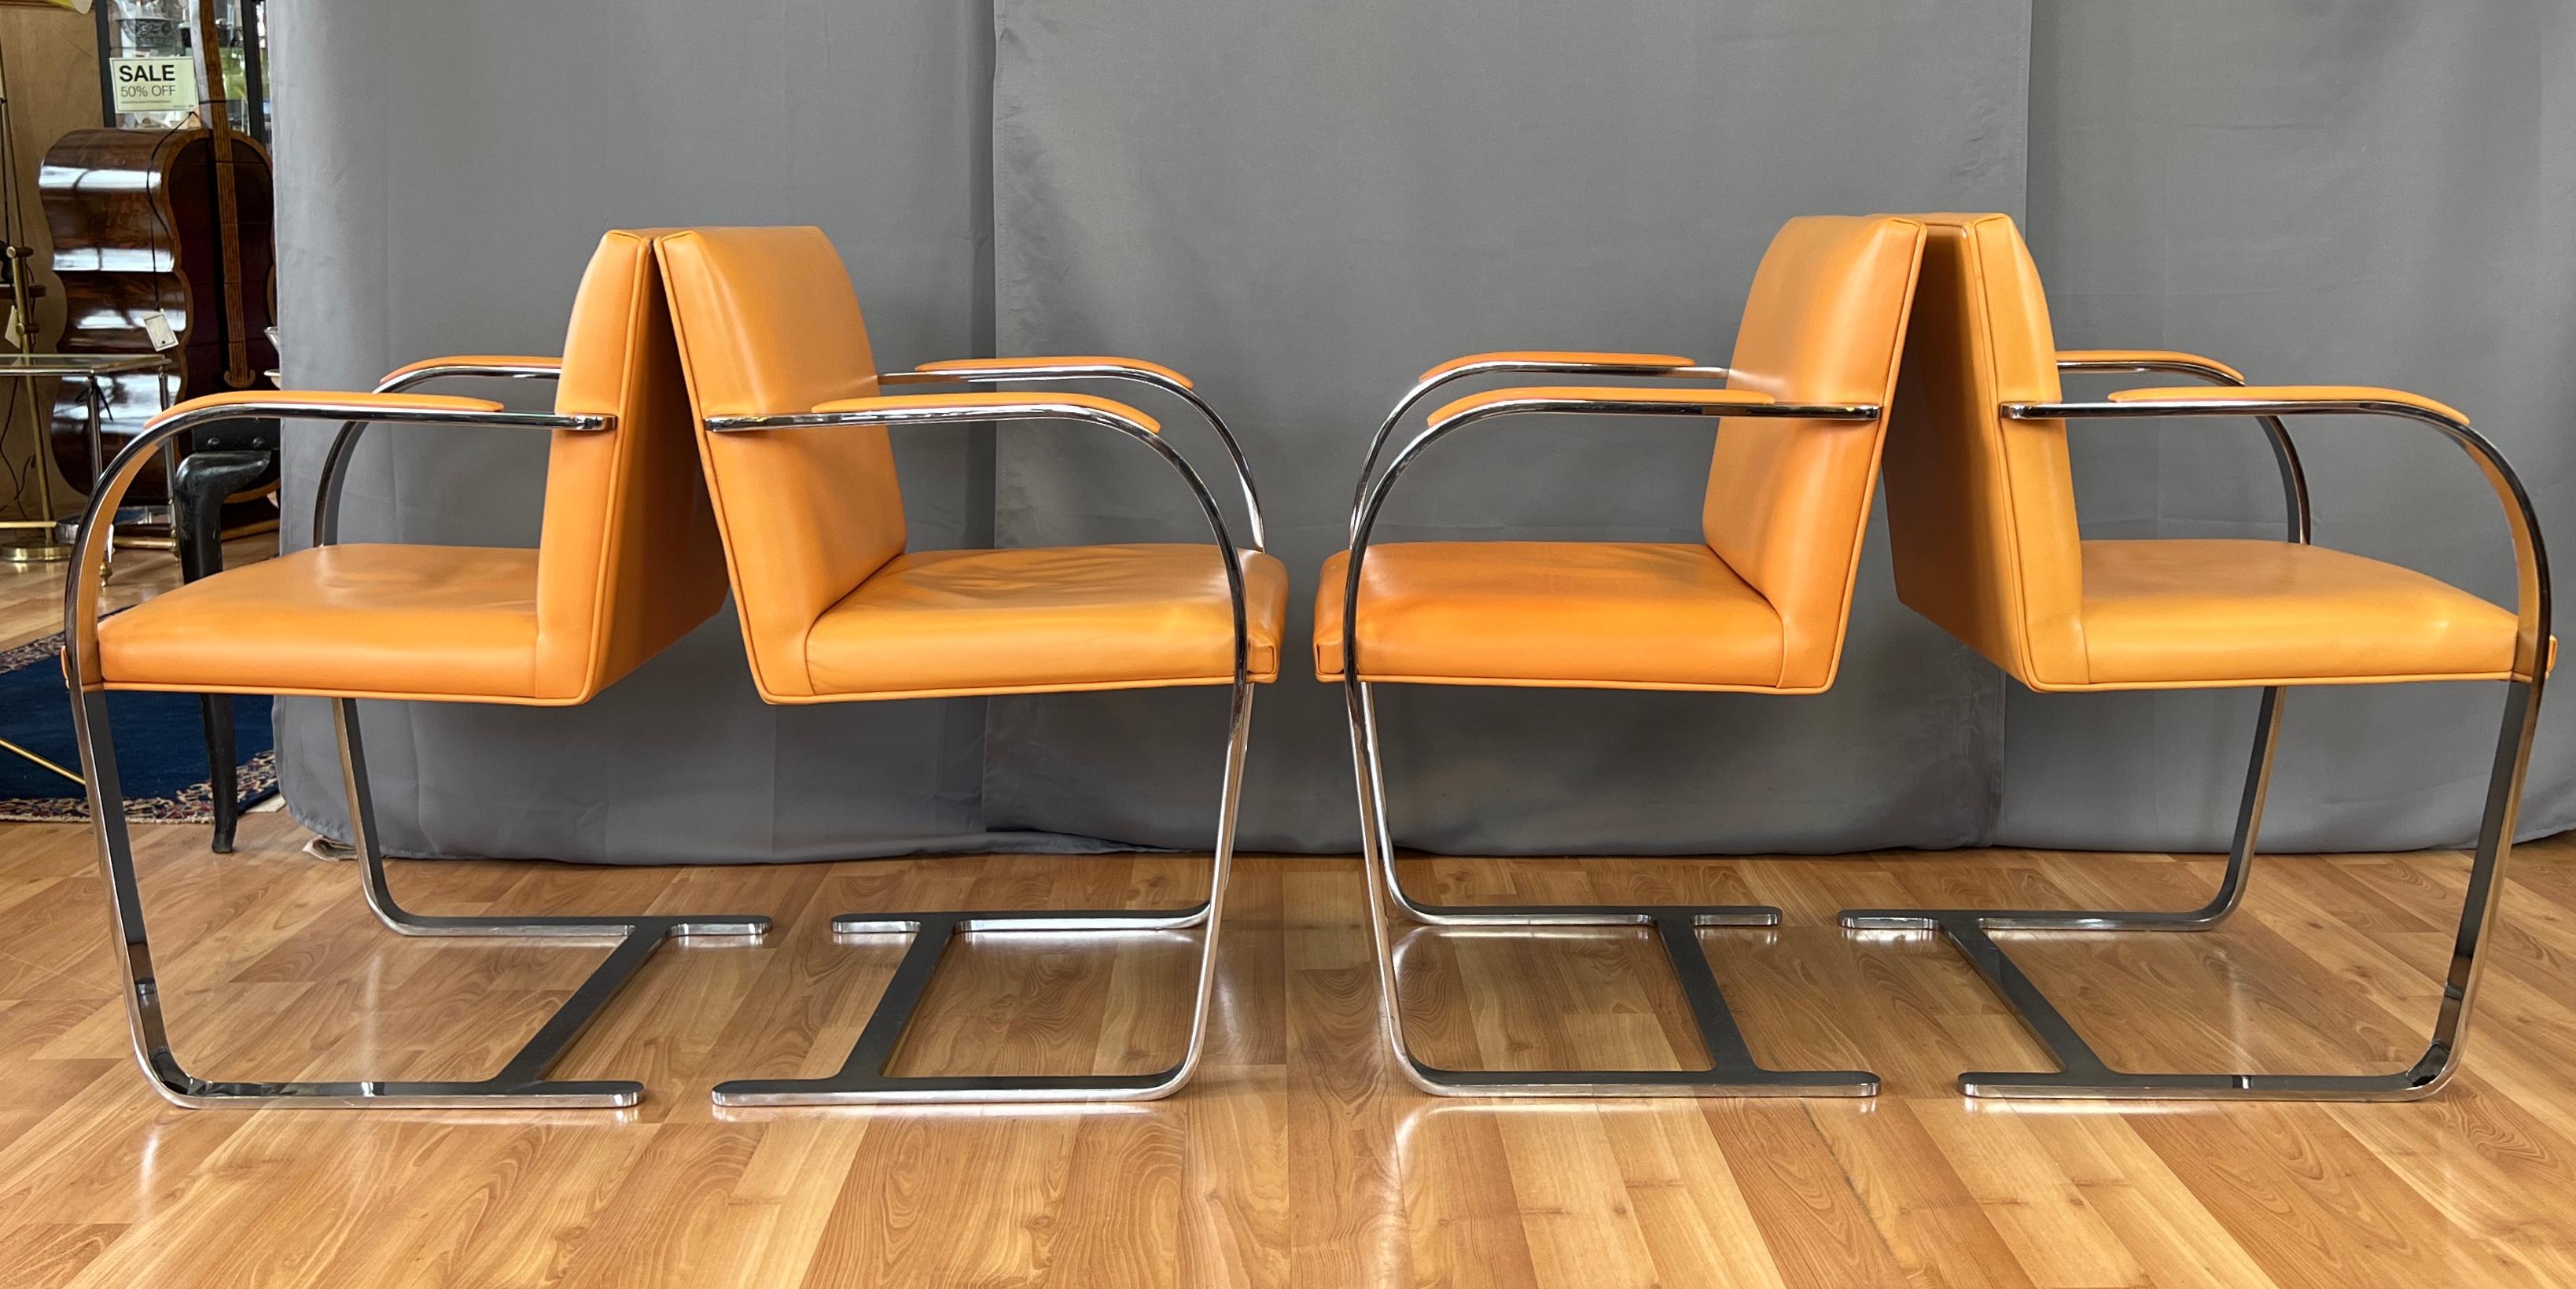 C. 1970s, Four Gordon International Flat Bar Brno Armchairs in Orange Leather 2